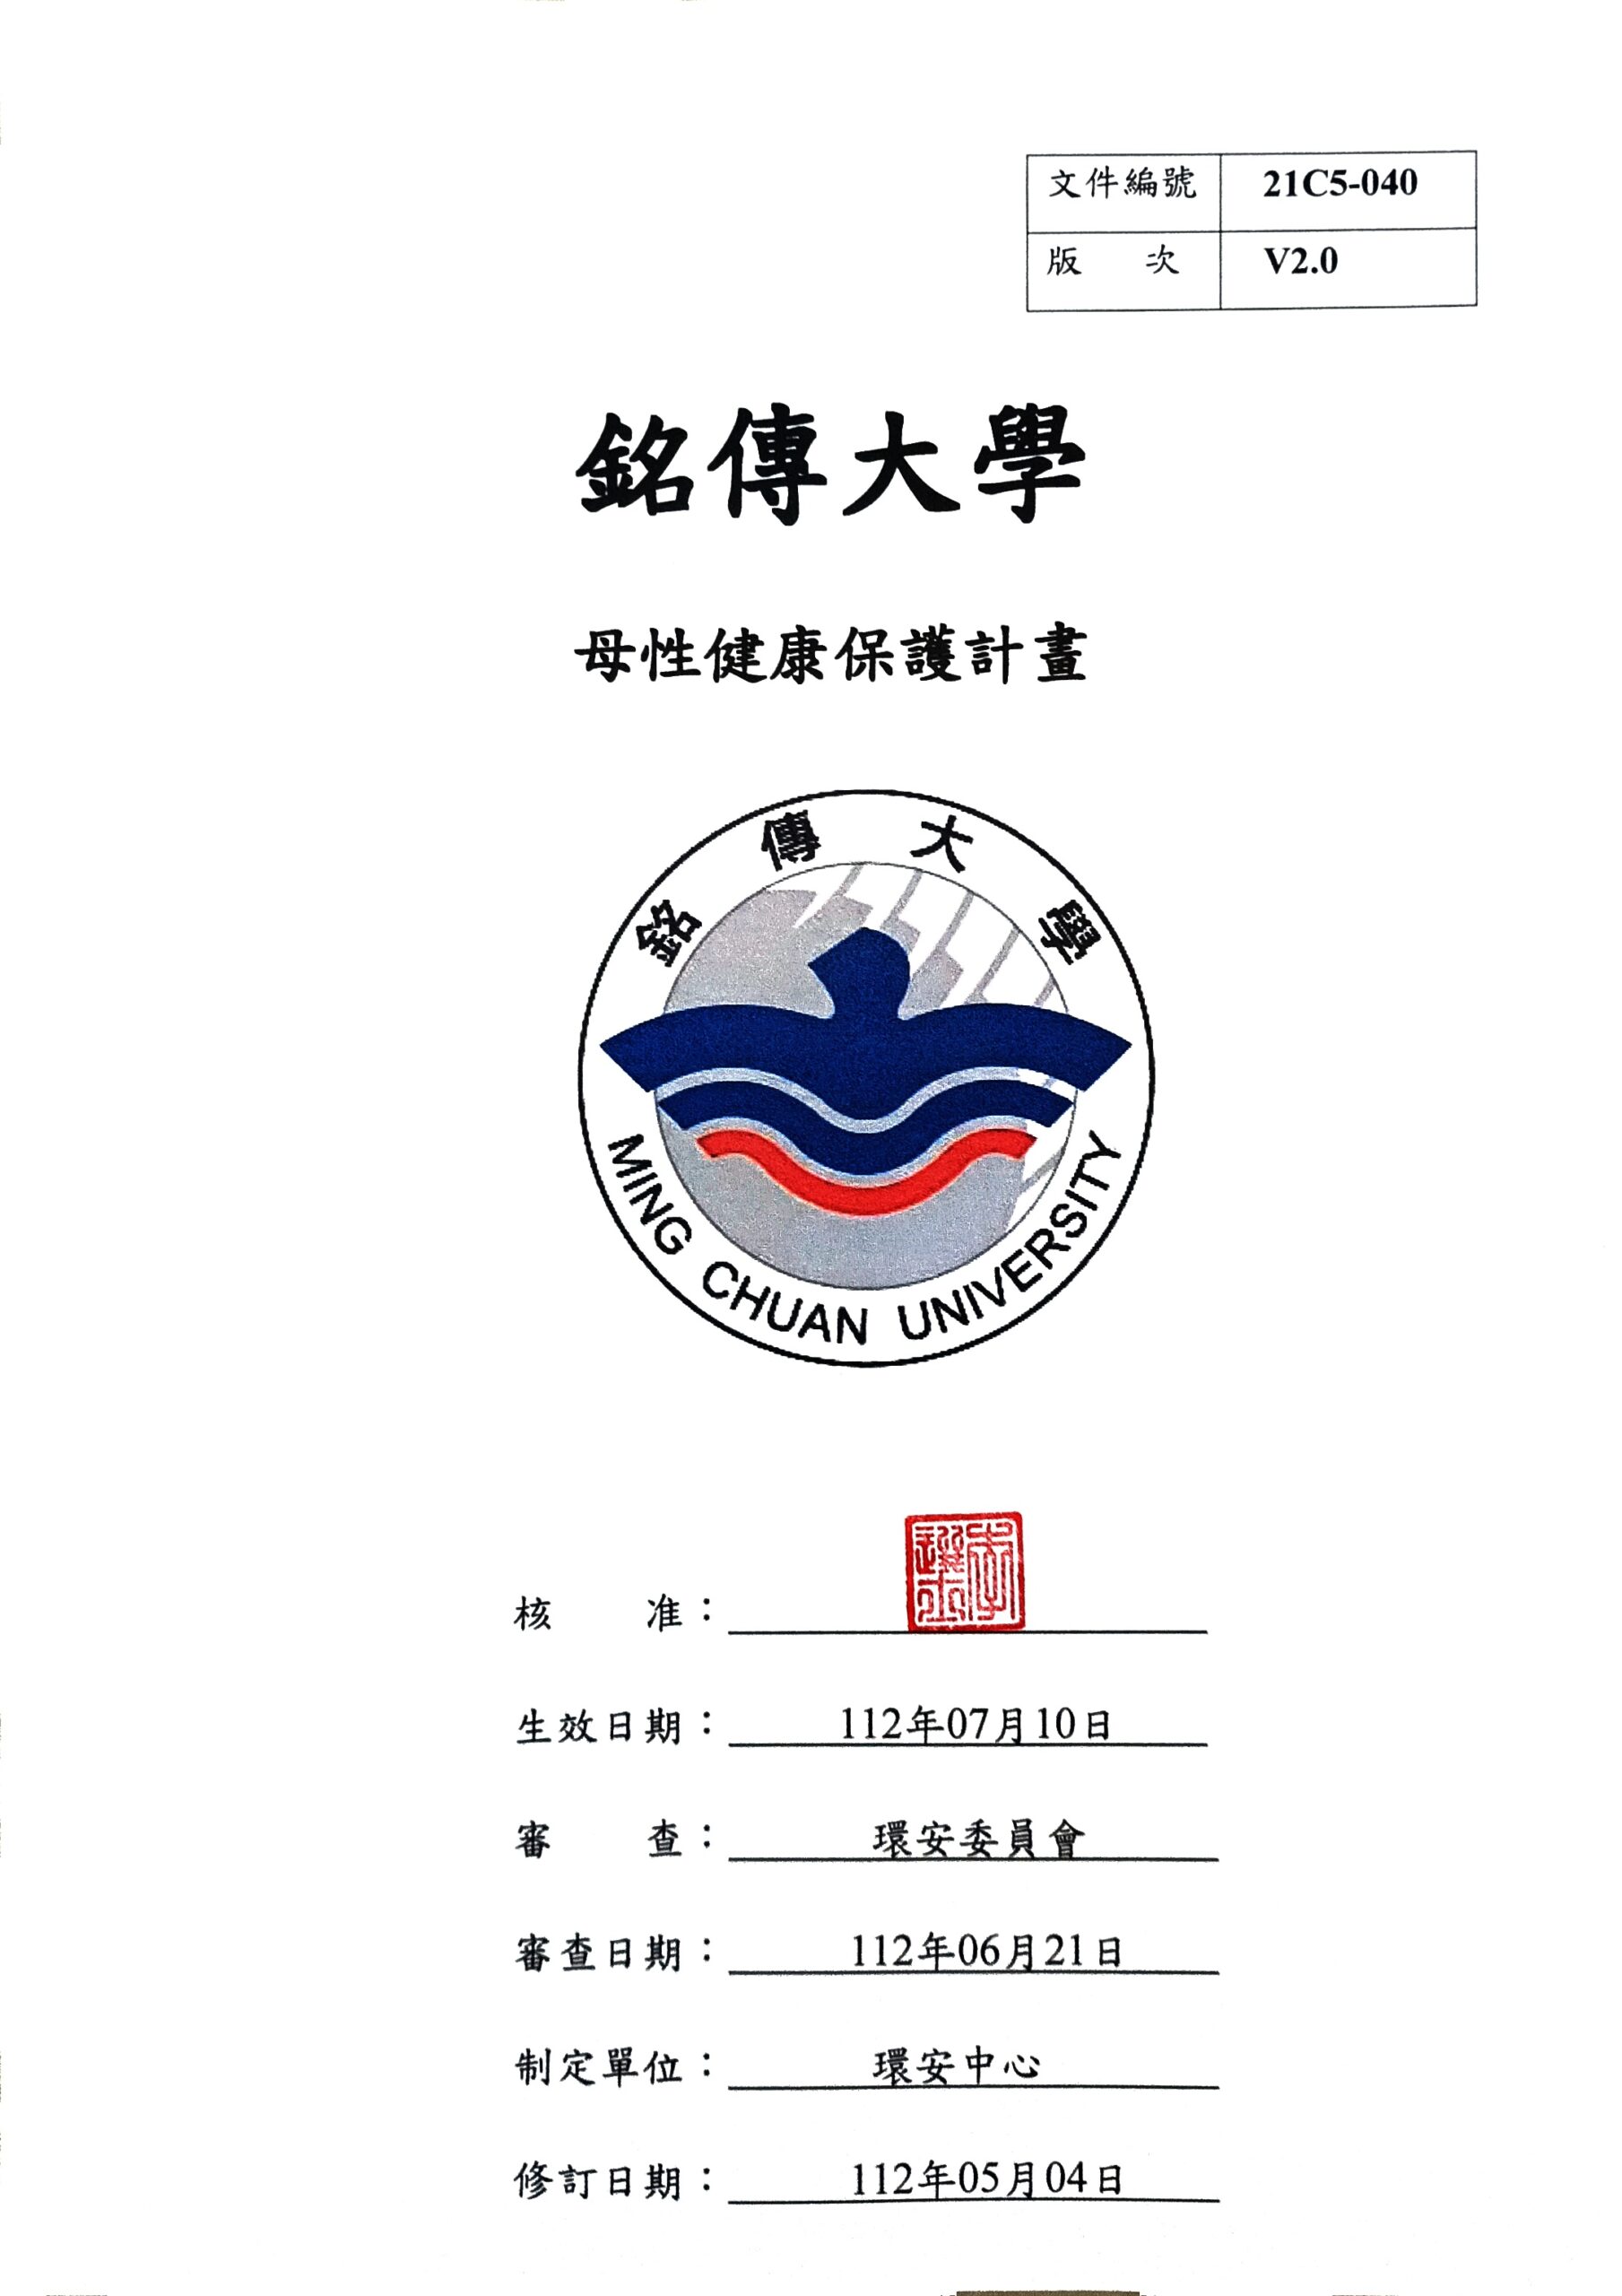 Featured image for “銘傳大學母性健康保護計畫已於112年07月10日校長核定公佈實施”